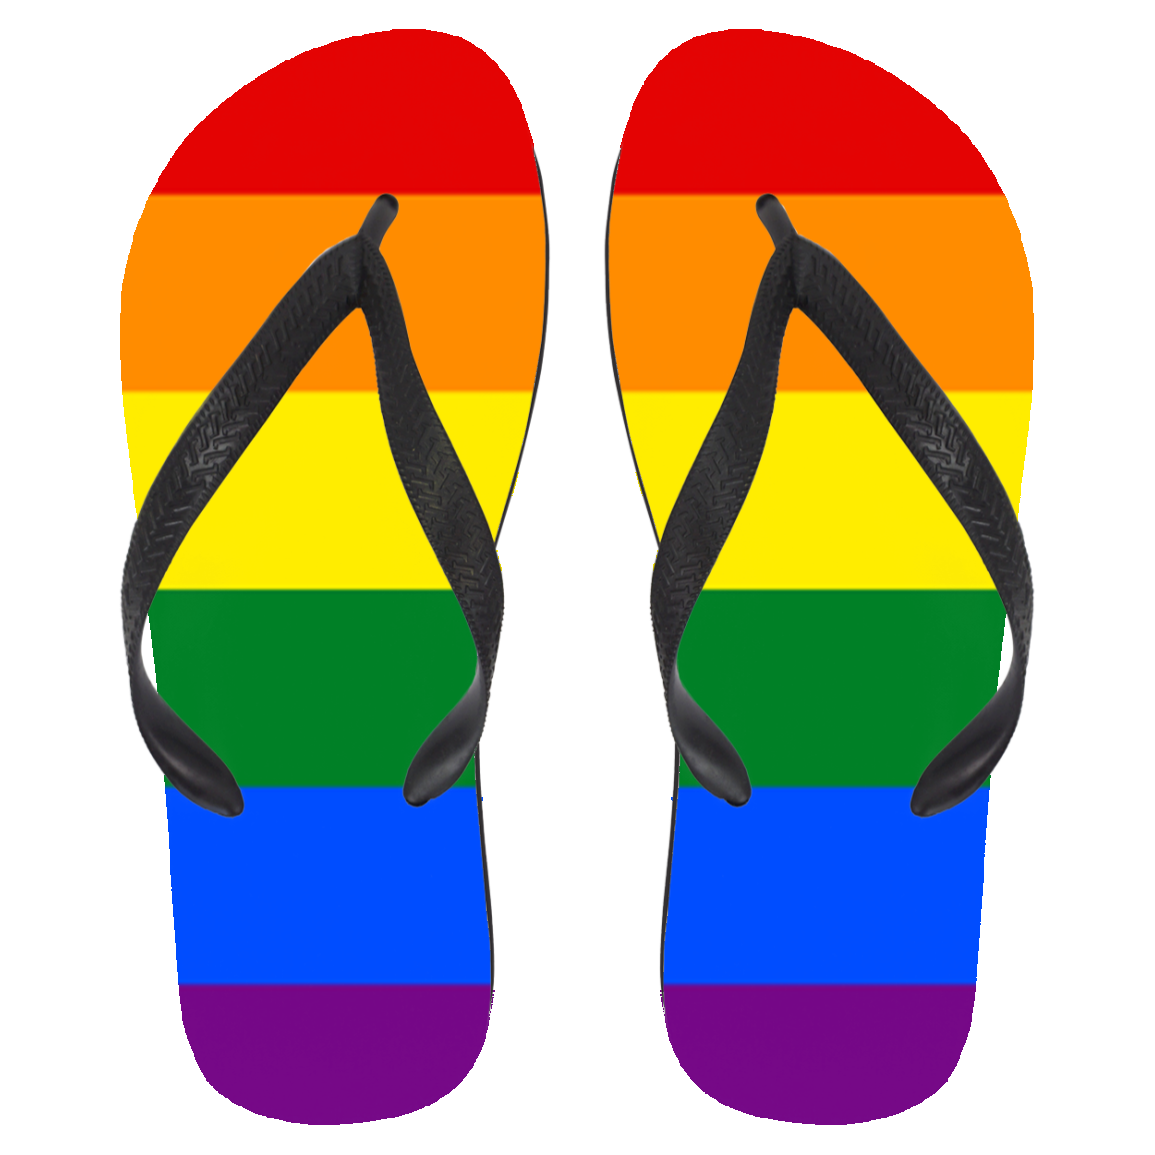 Rainbow Pride Flip Flops